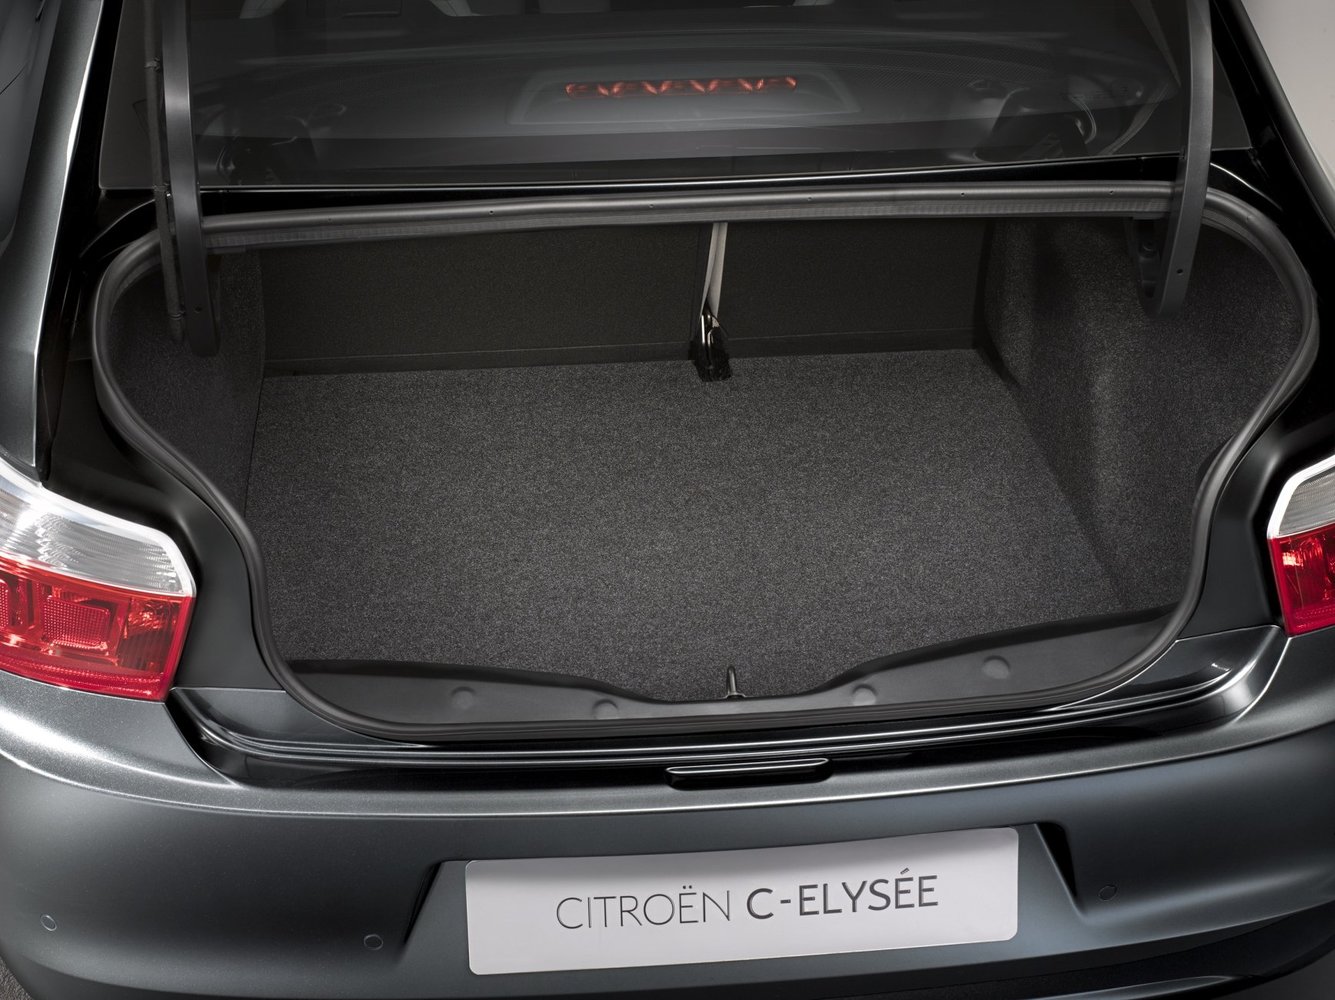 седан Citroen C-Elysee 2013 - 2016г выпуска модификация 1.6 MT (92 л.с.)